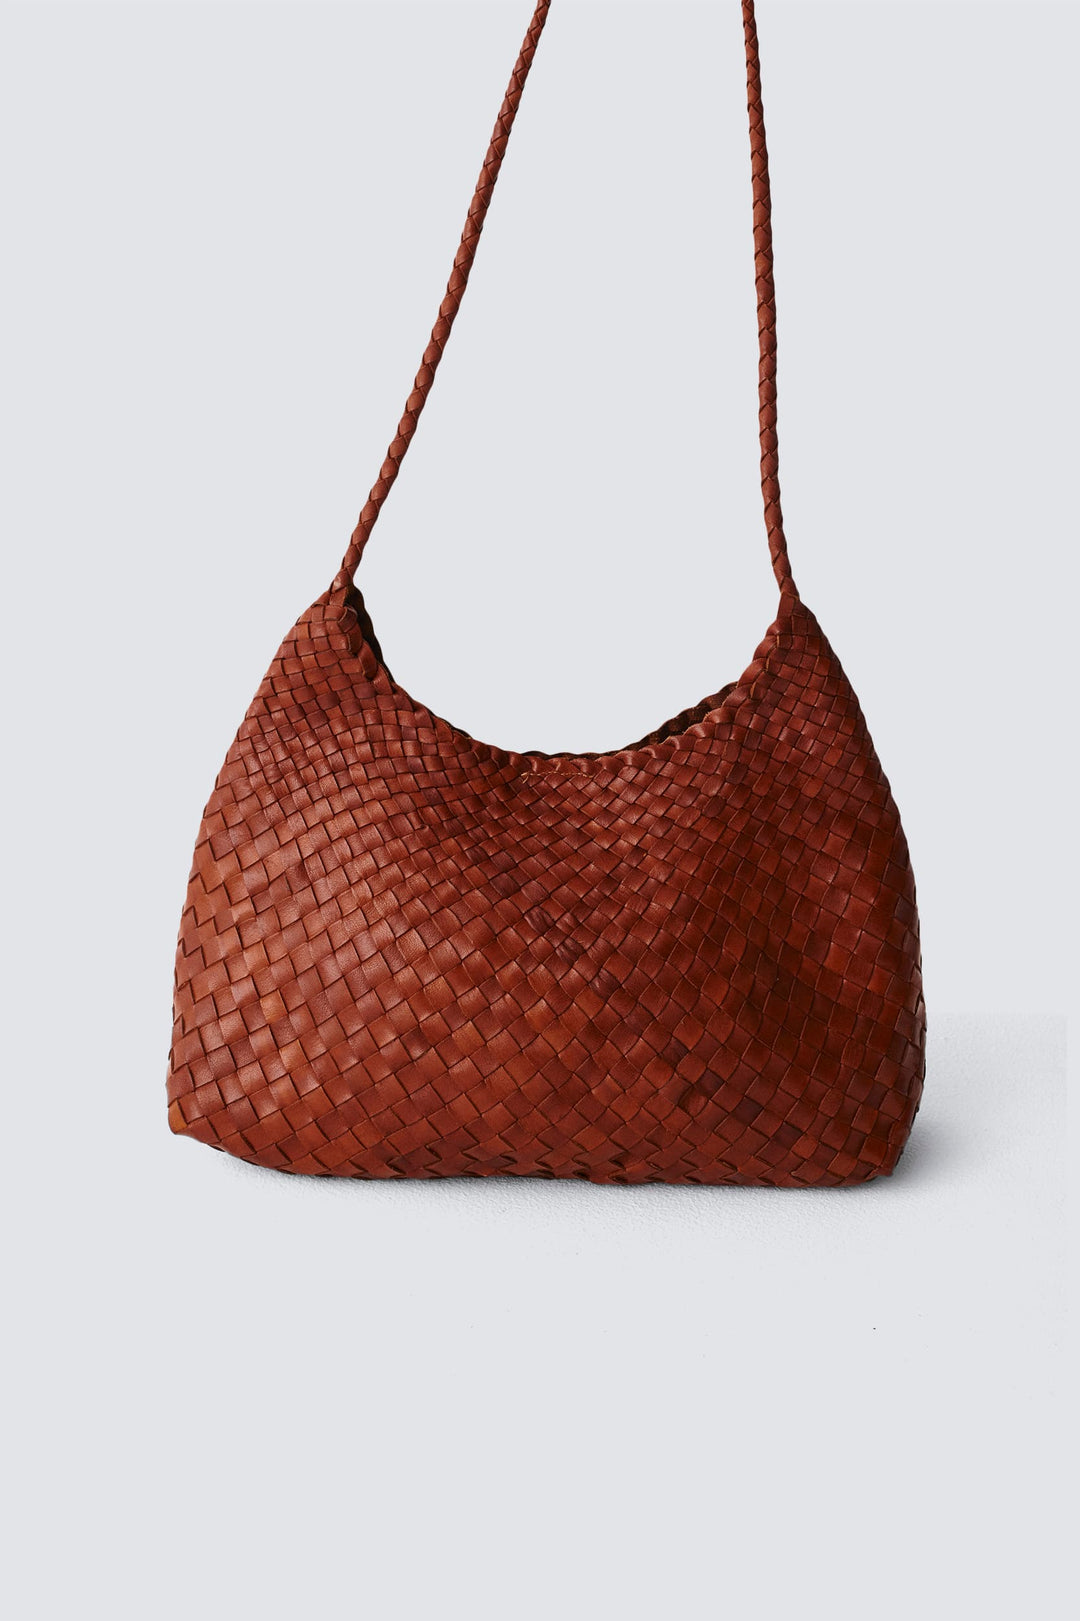 Dragon Diffusion woven leather bag handmade - Santa Rosa Tan